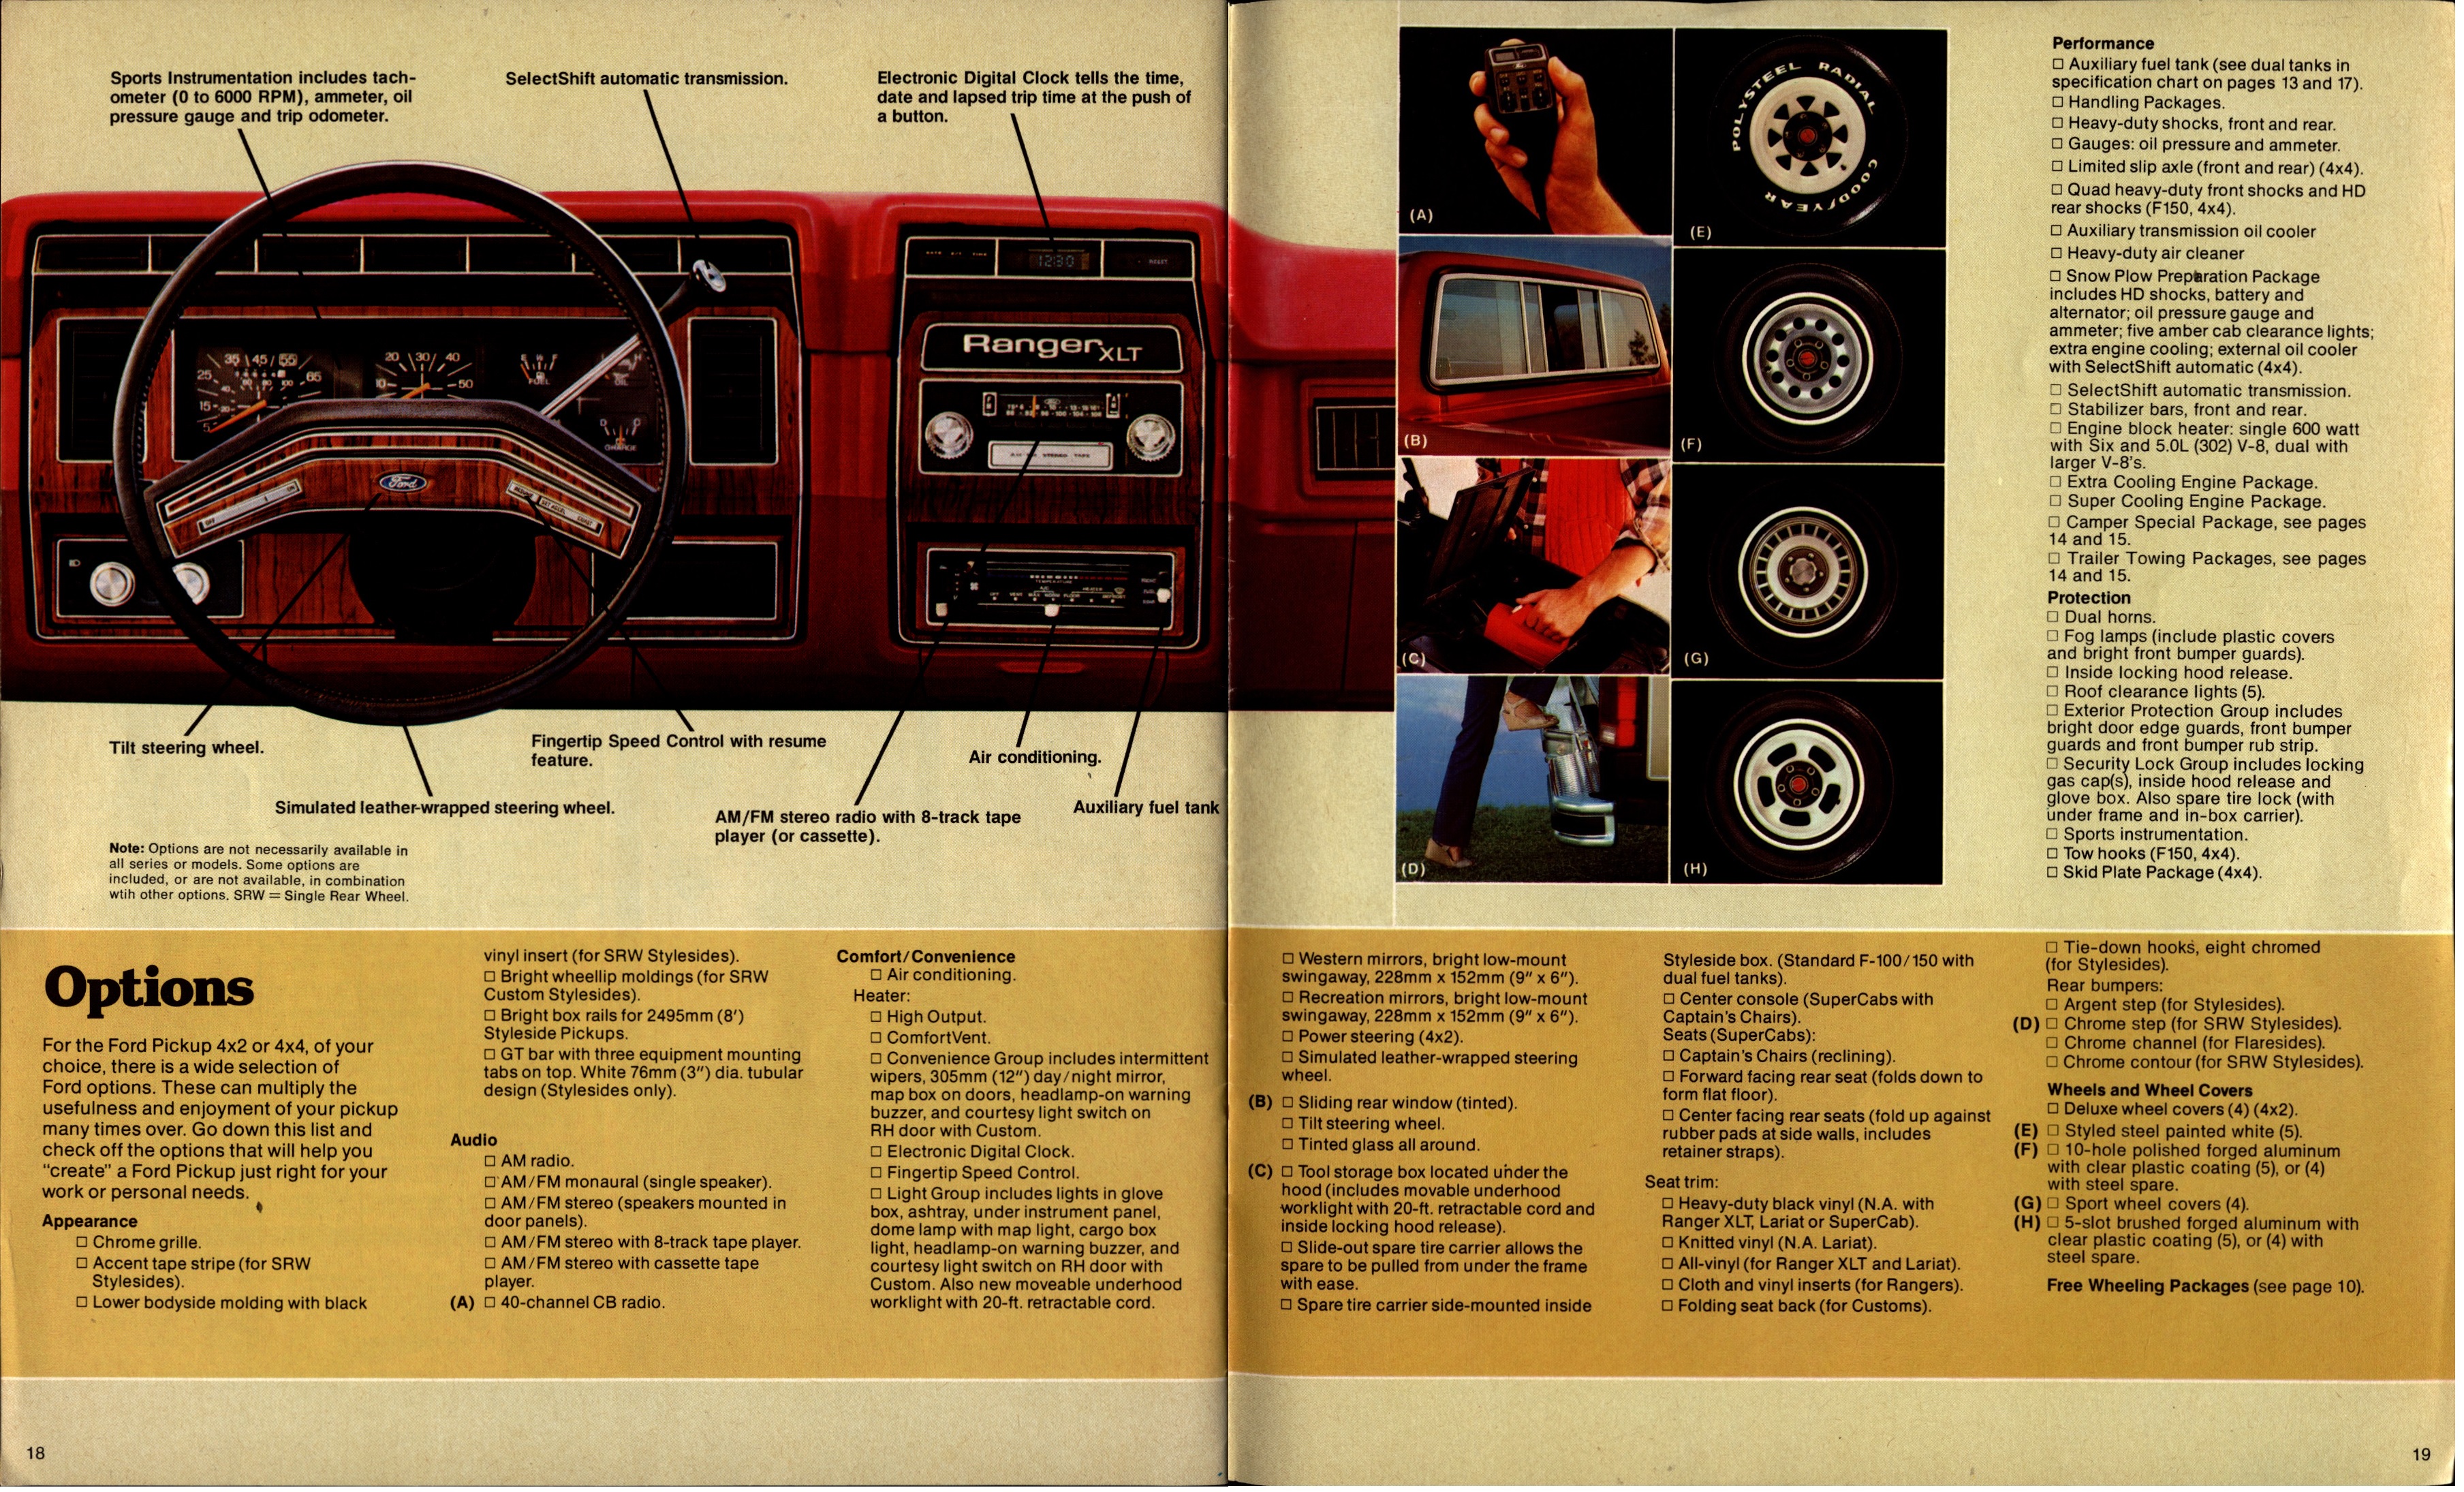 1980 Ford Pickup Brochure (Cdn) 18-19